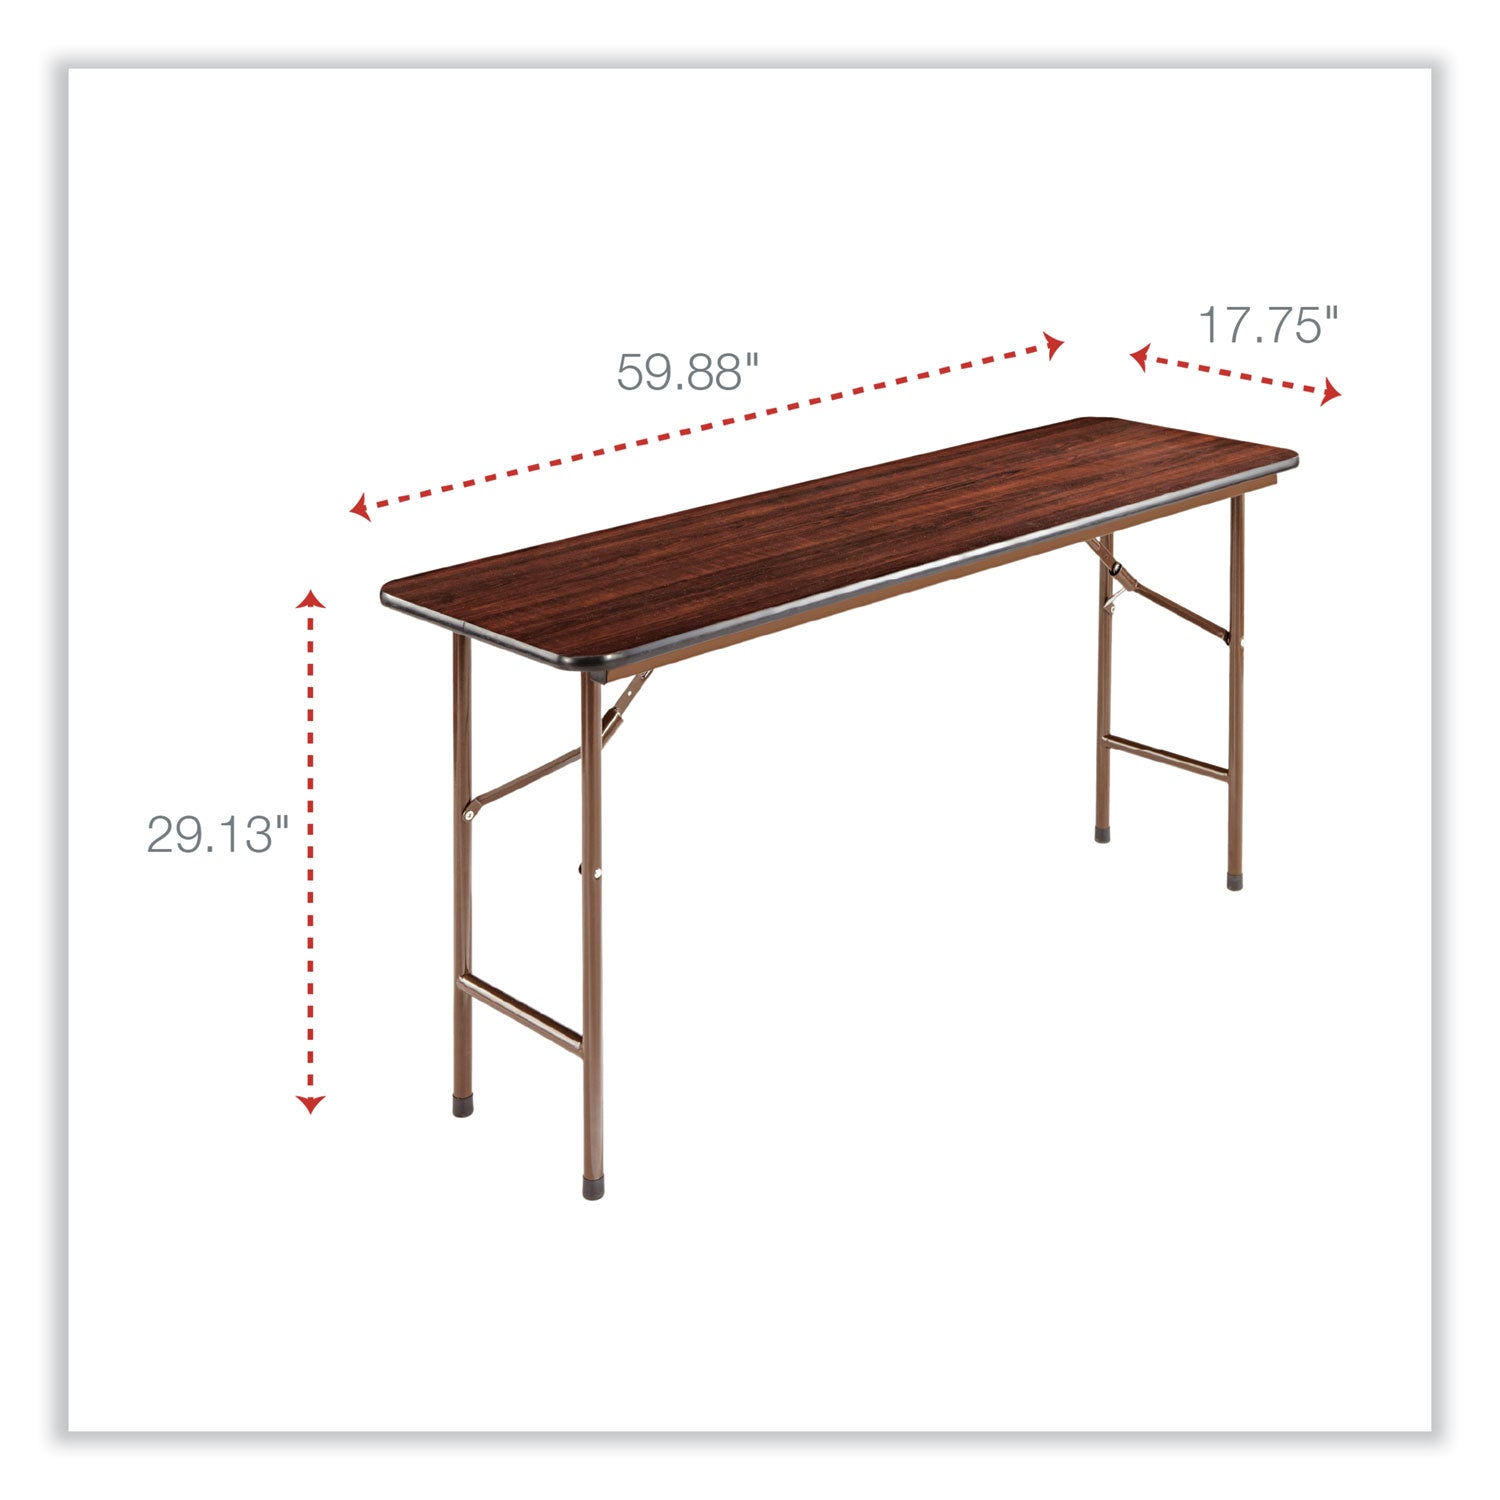 wood-folding-table-rectangular-5988w-x-1775d-x-2913h-mahogany_aleft726018my - 2